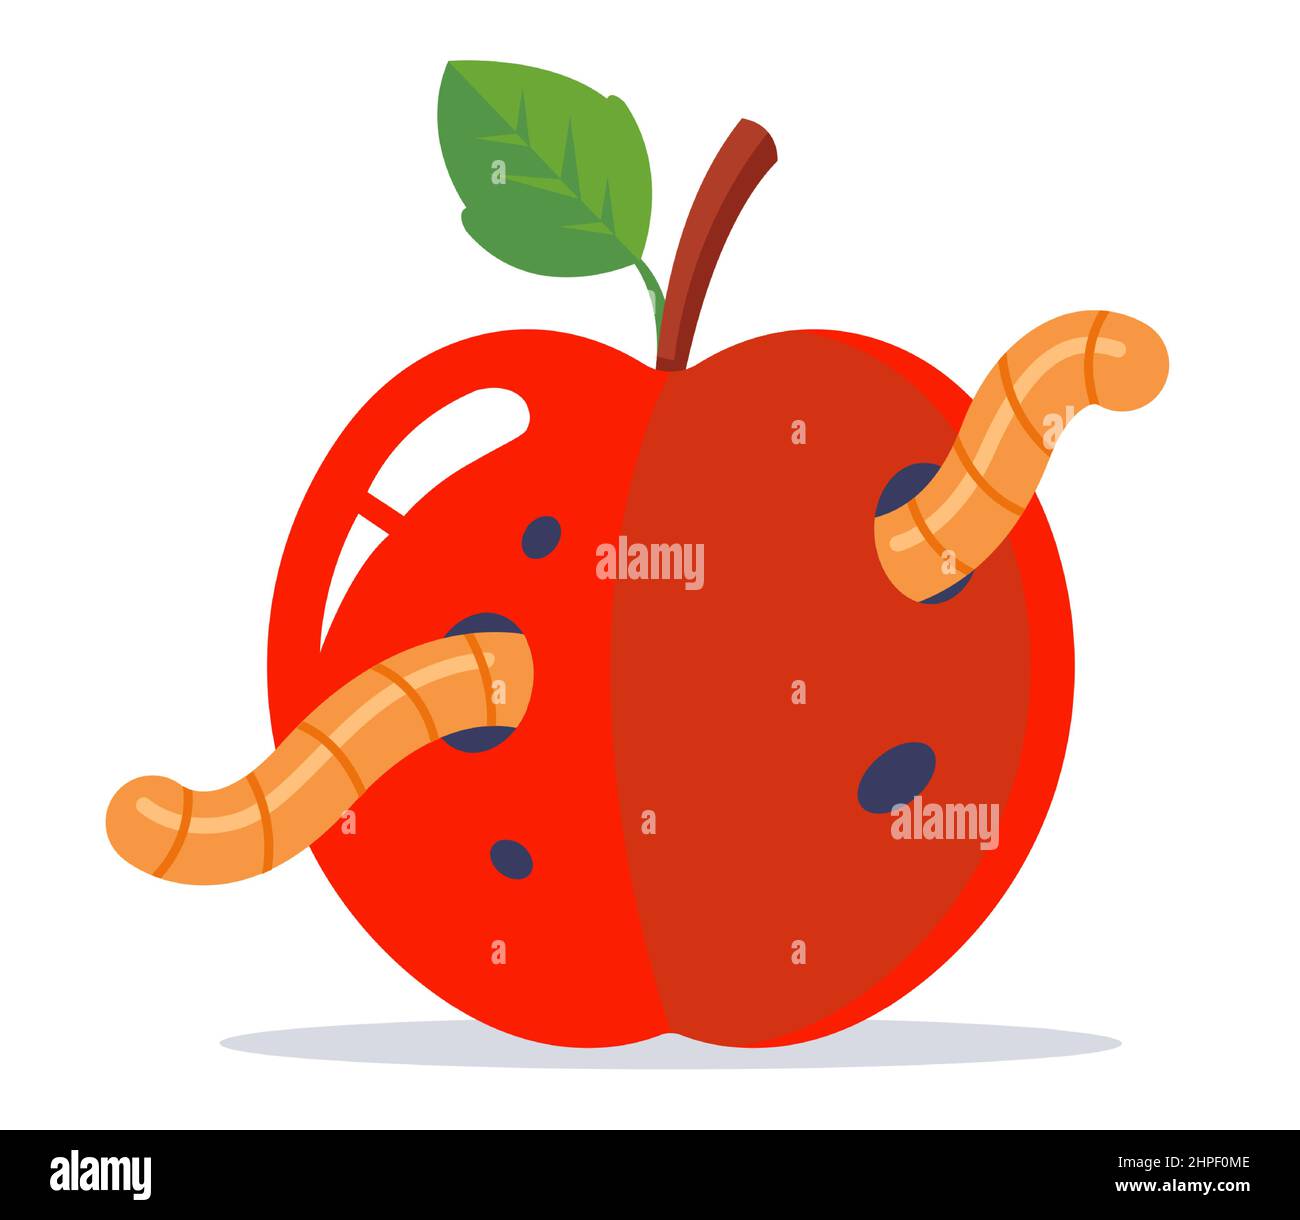 Wormy roten Apfel mit einem grünen Blatt. Flache Vektor-Illustration. Stock Vektor